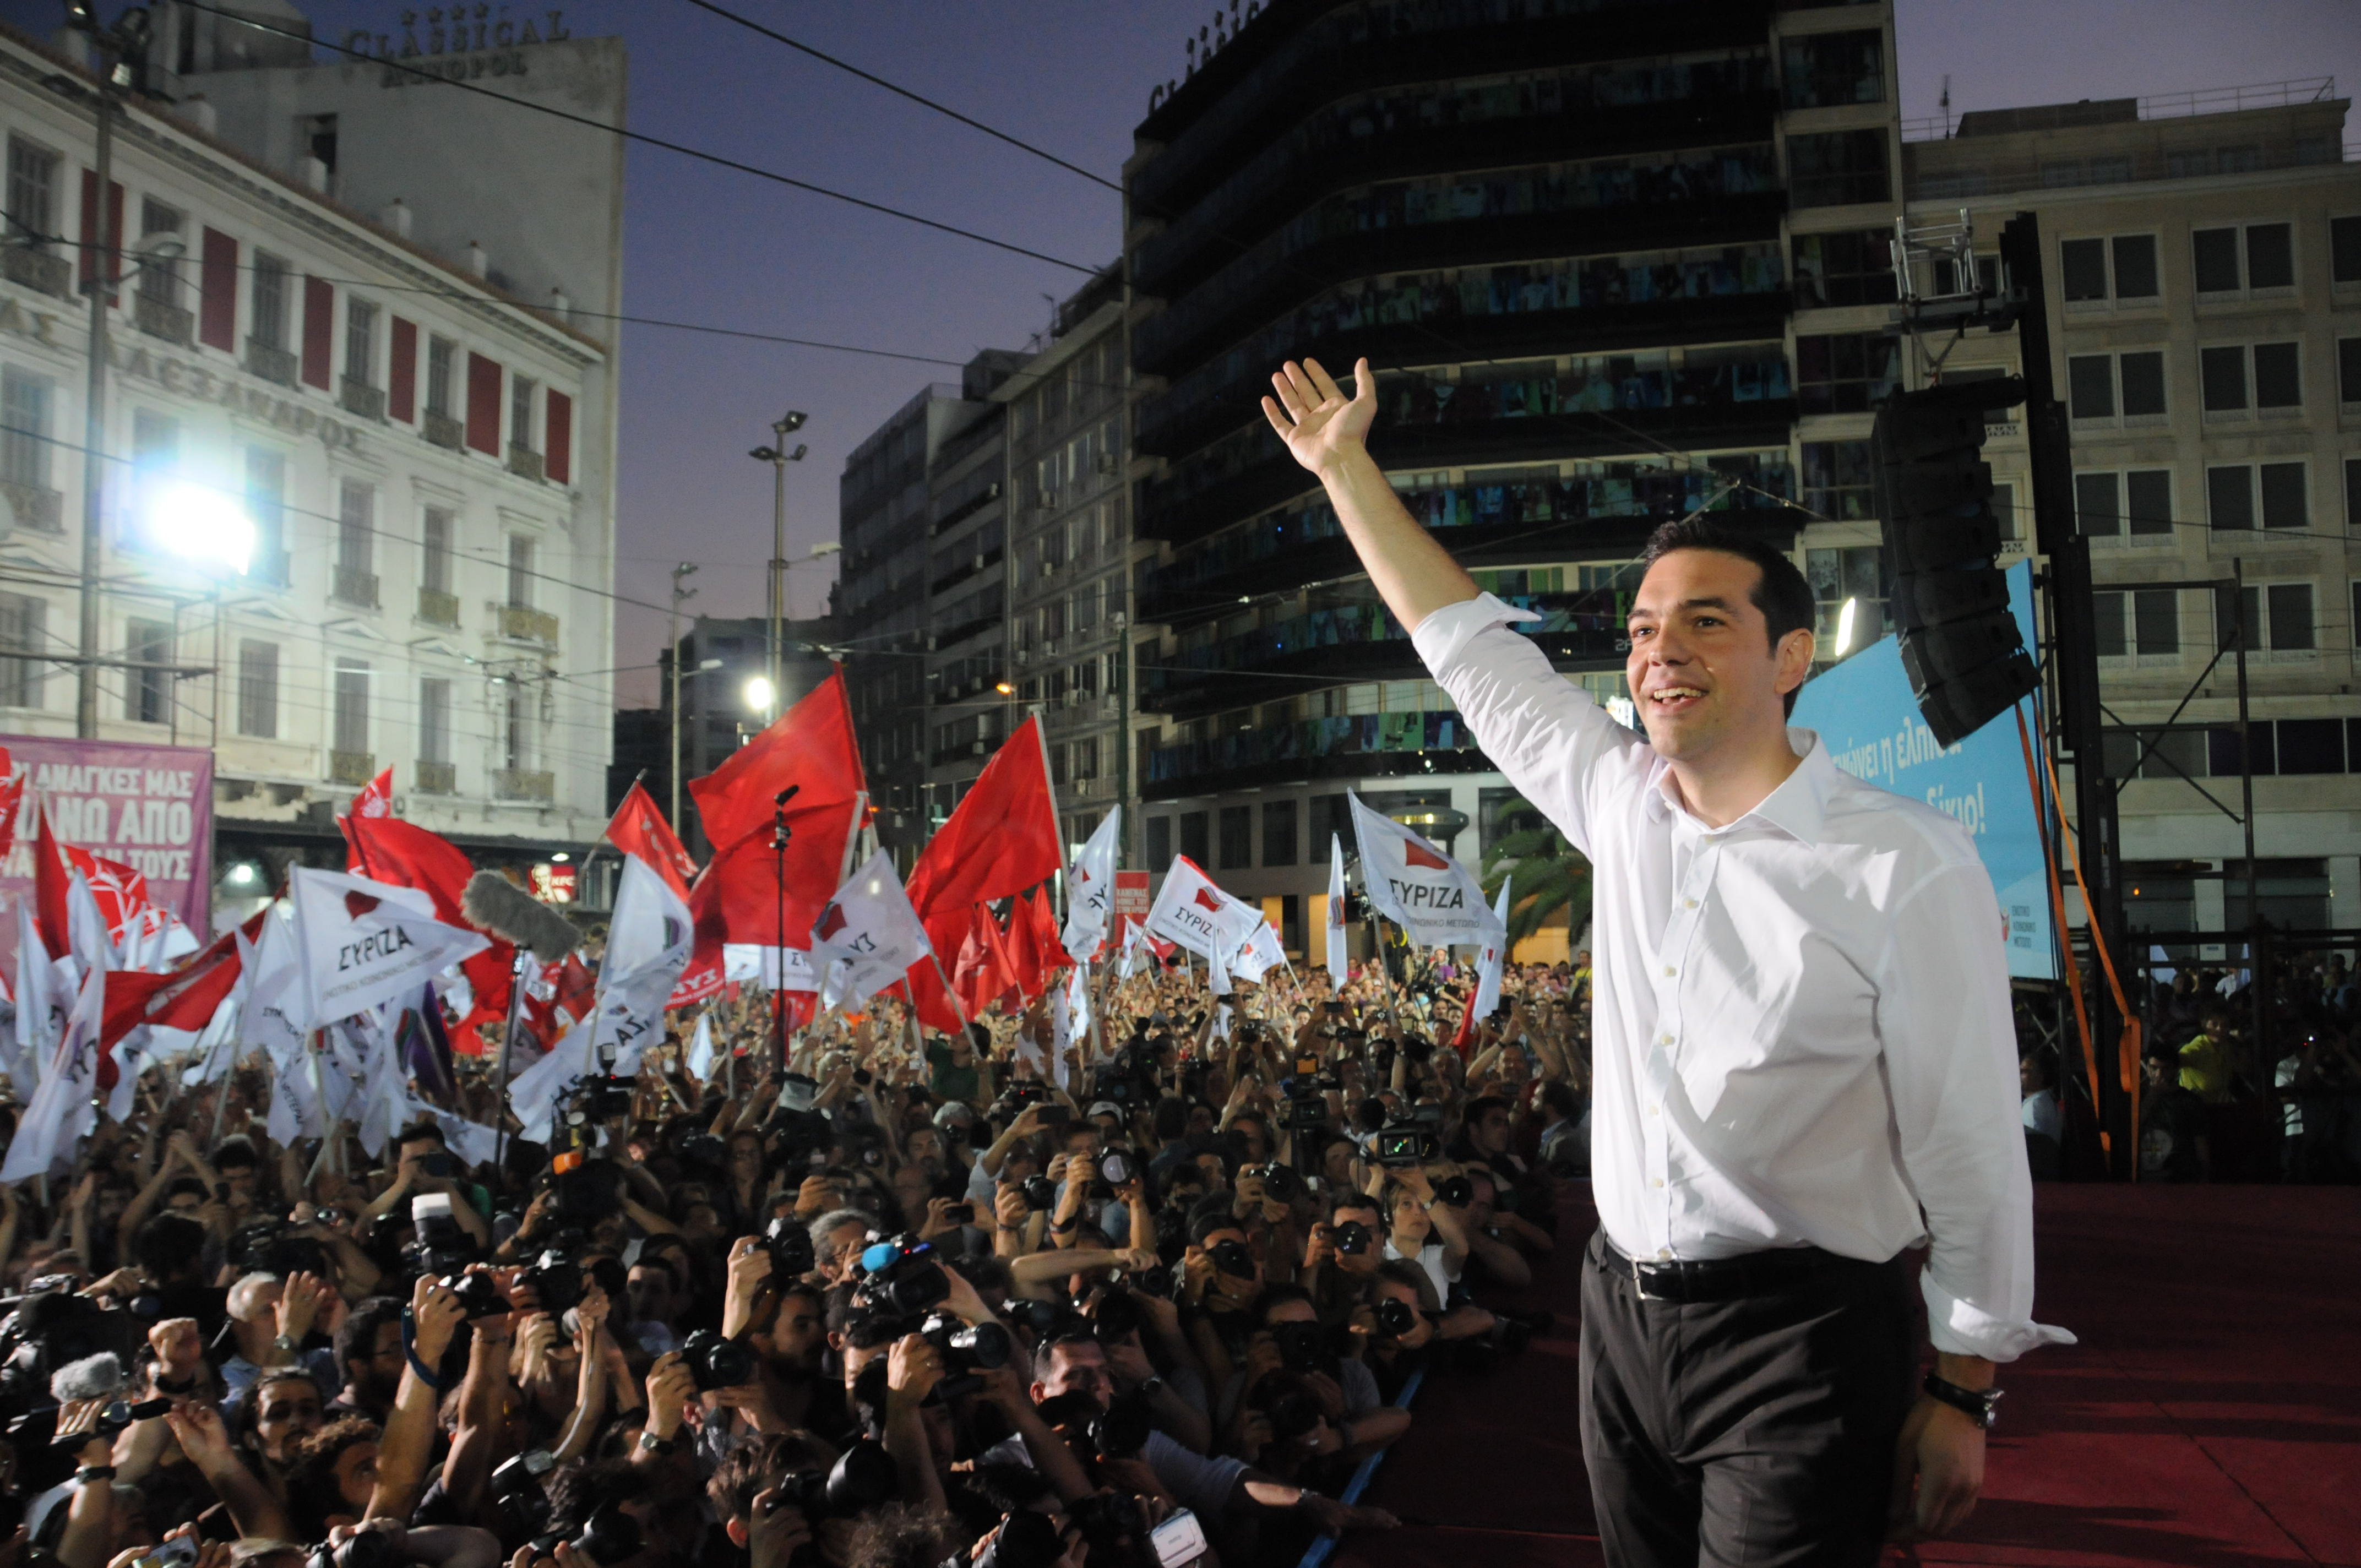 O πρώην «Καιρός» της Ελευθεροτυπίας ζητά συγνώμη επειδή ψήφισε ΣΥΡΙΖΑ